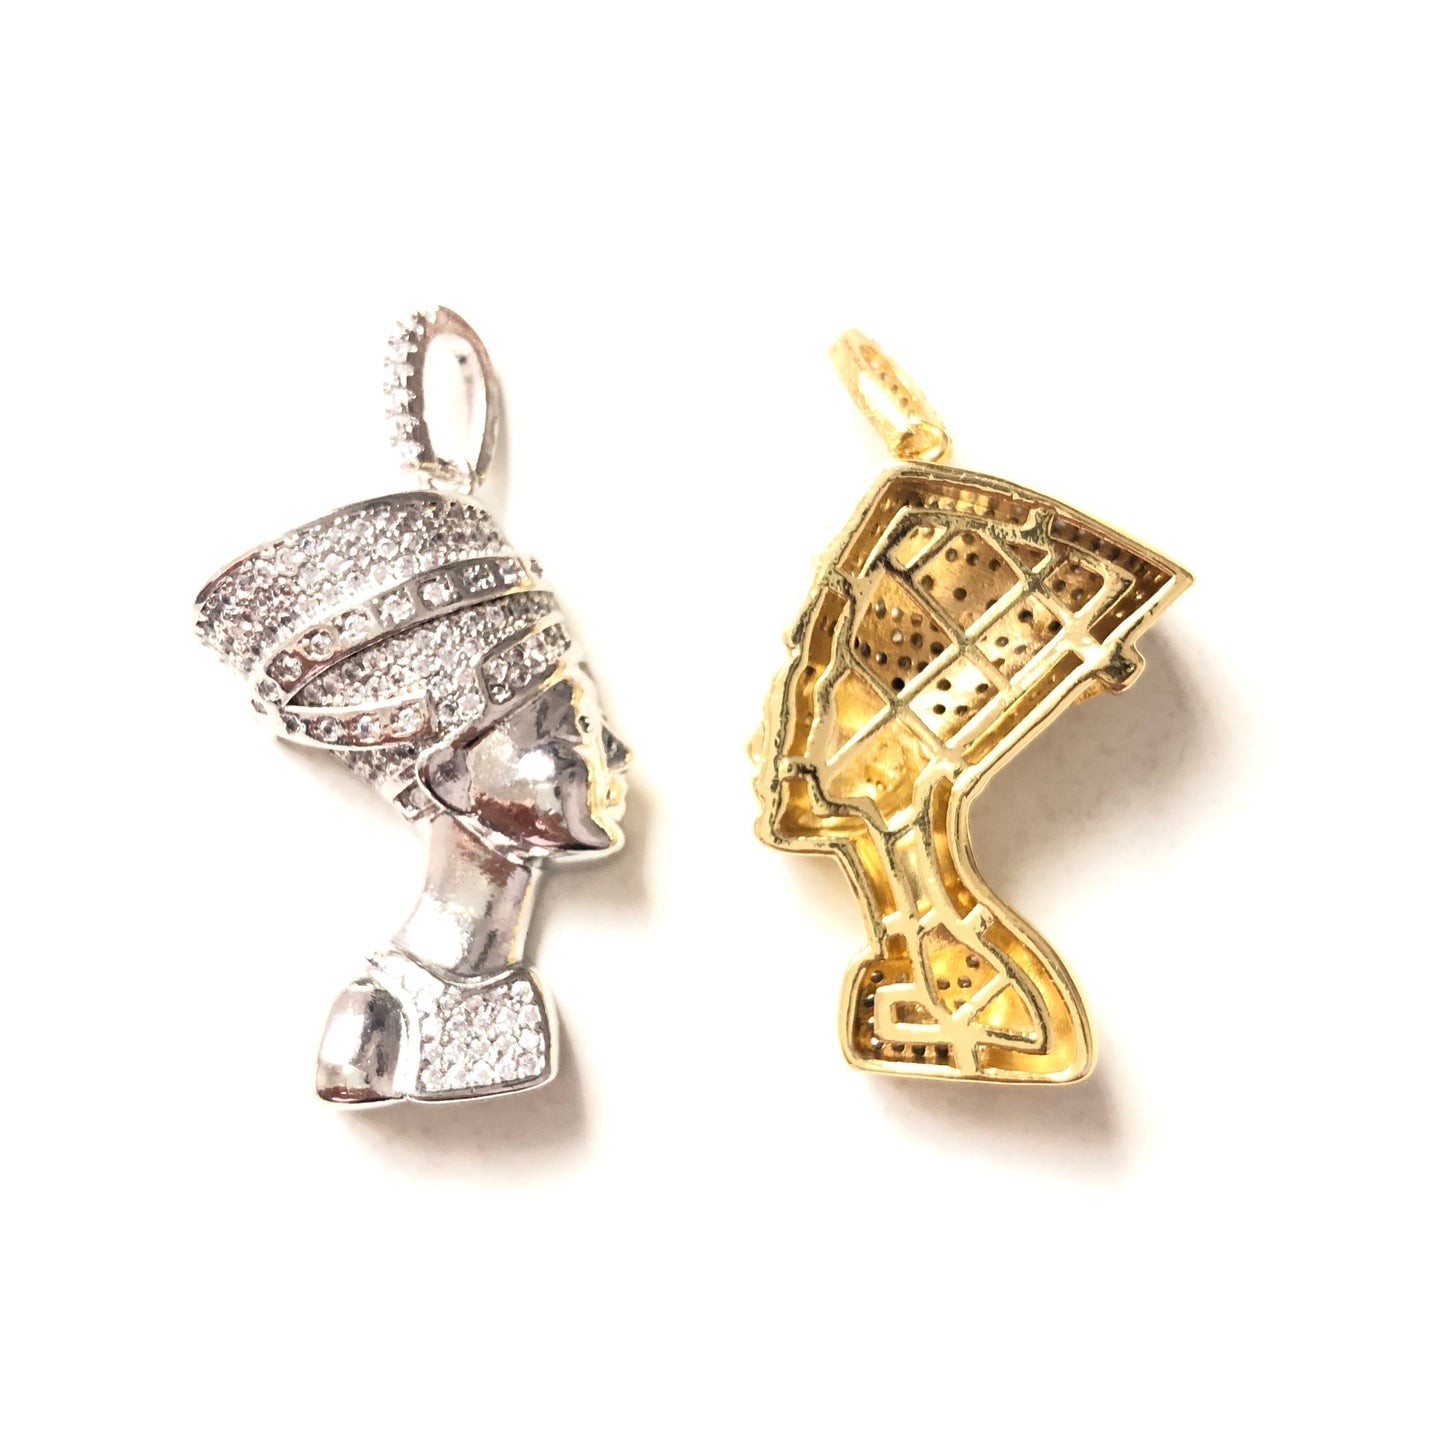 10pcs/lot 41*21mm CZ Paved Queen Nefertiti Charms CZ Paved Charms Large Sizes Queen Charms Charms Beads Beyond